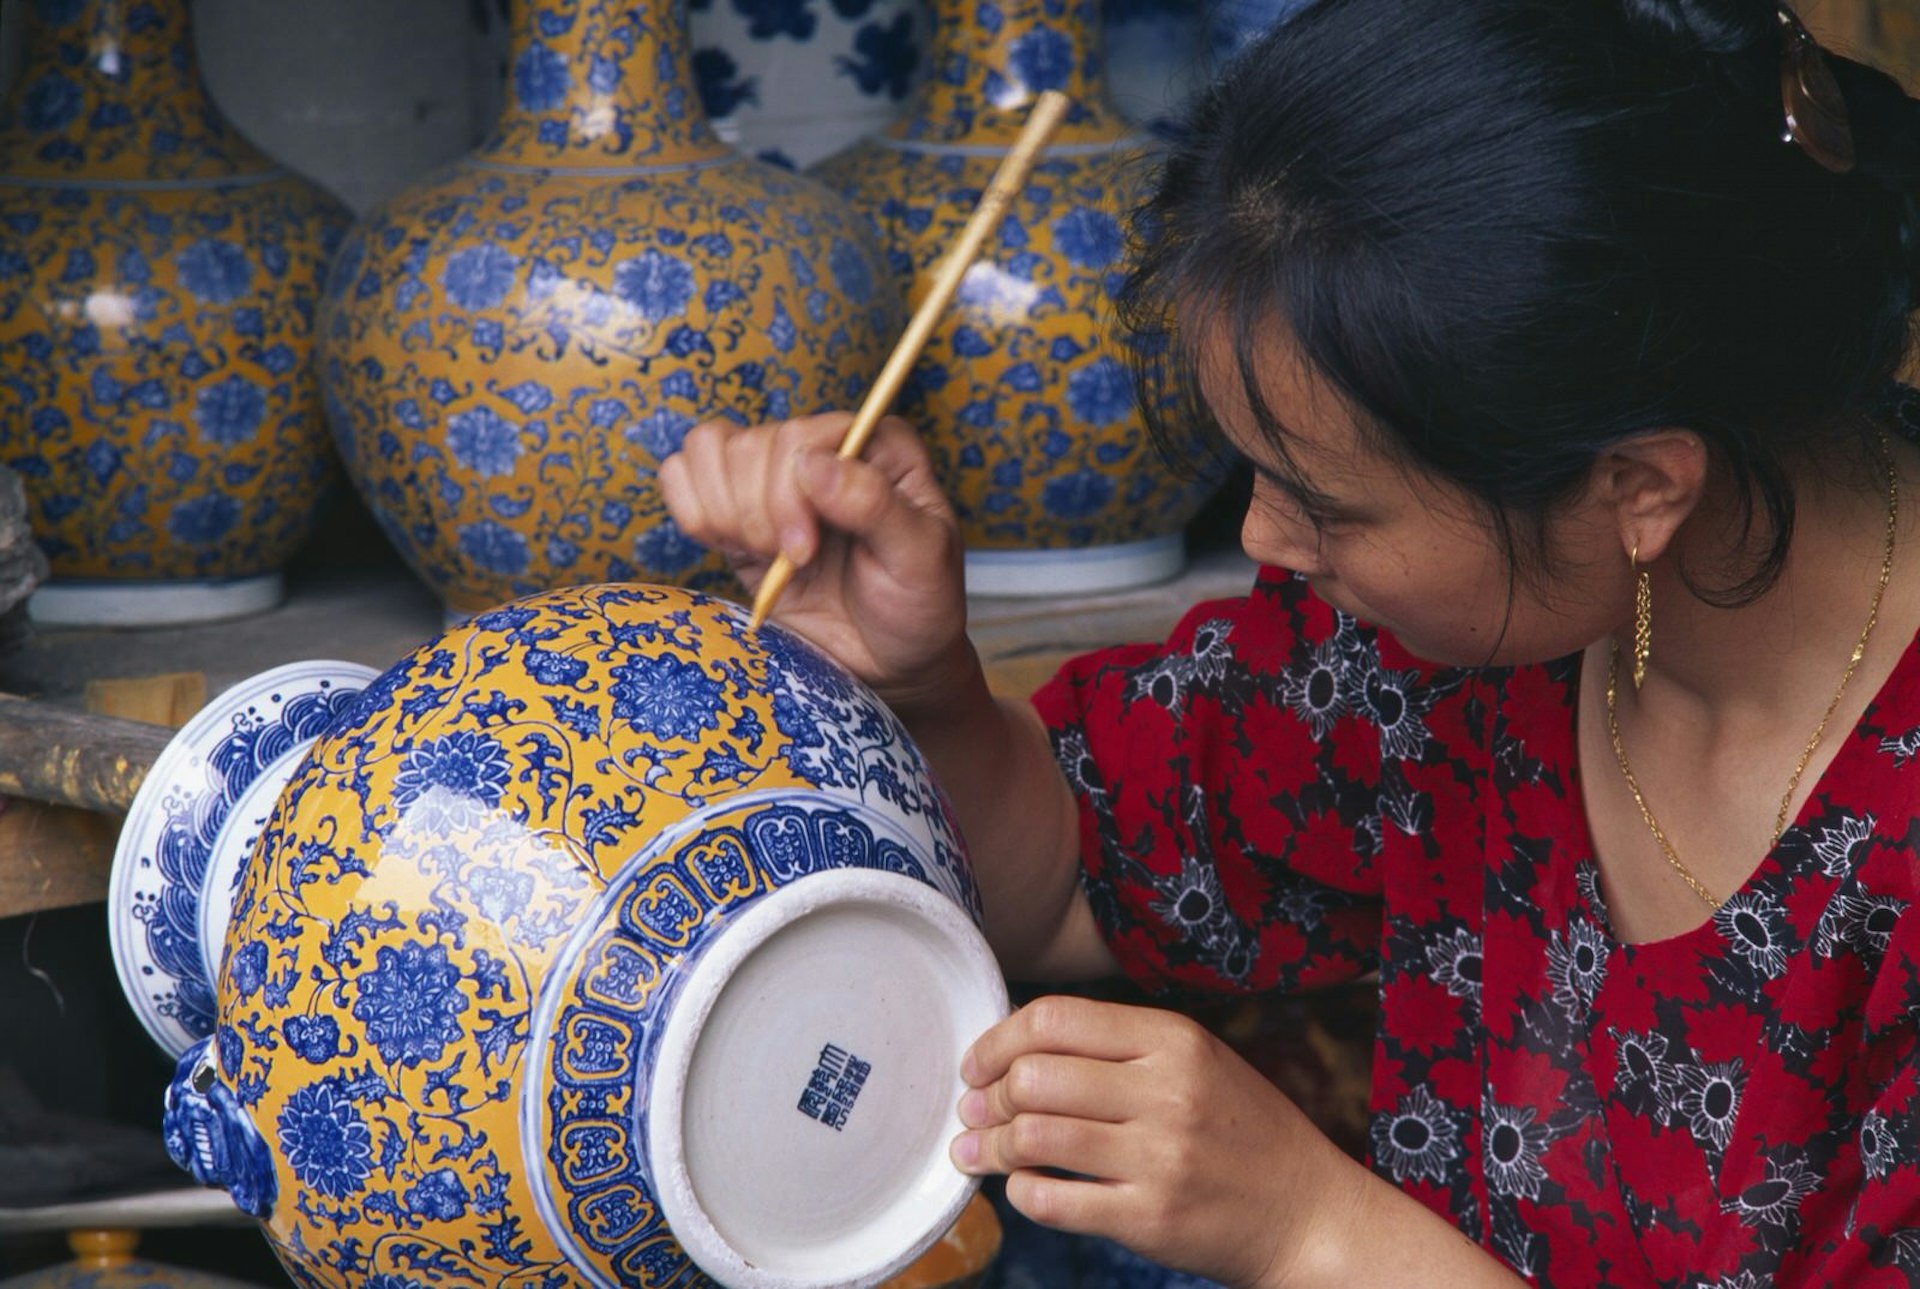 wedding anniversary trip ideas - a woman paints a porcelain vase in Jingdezhen, China.